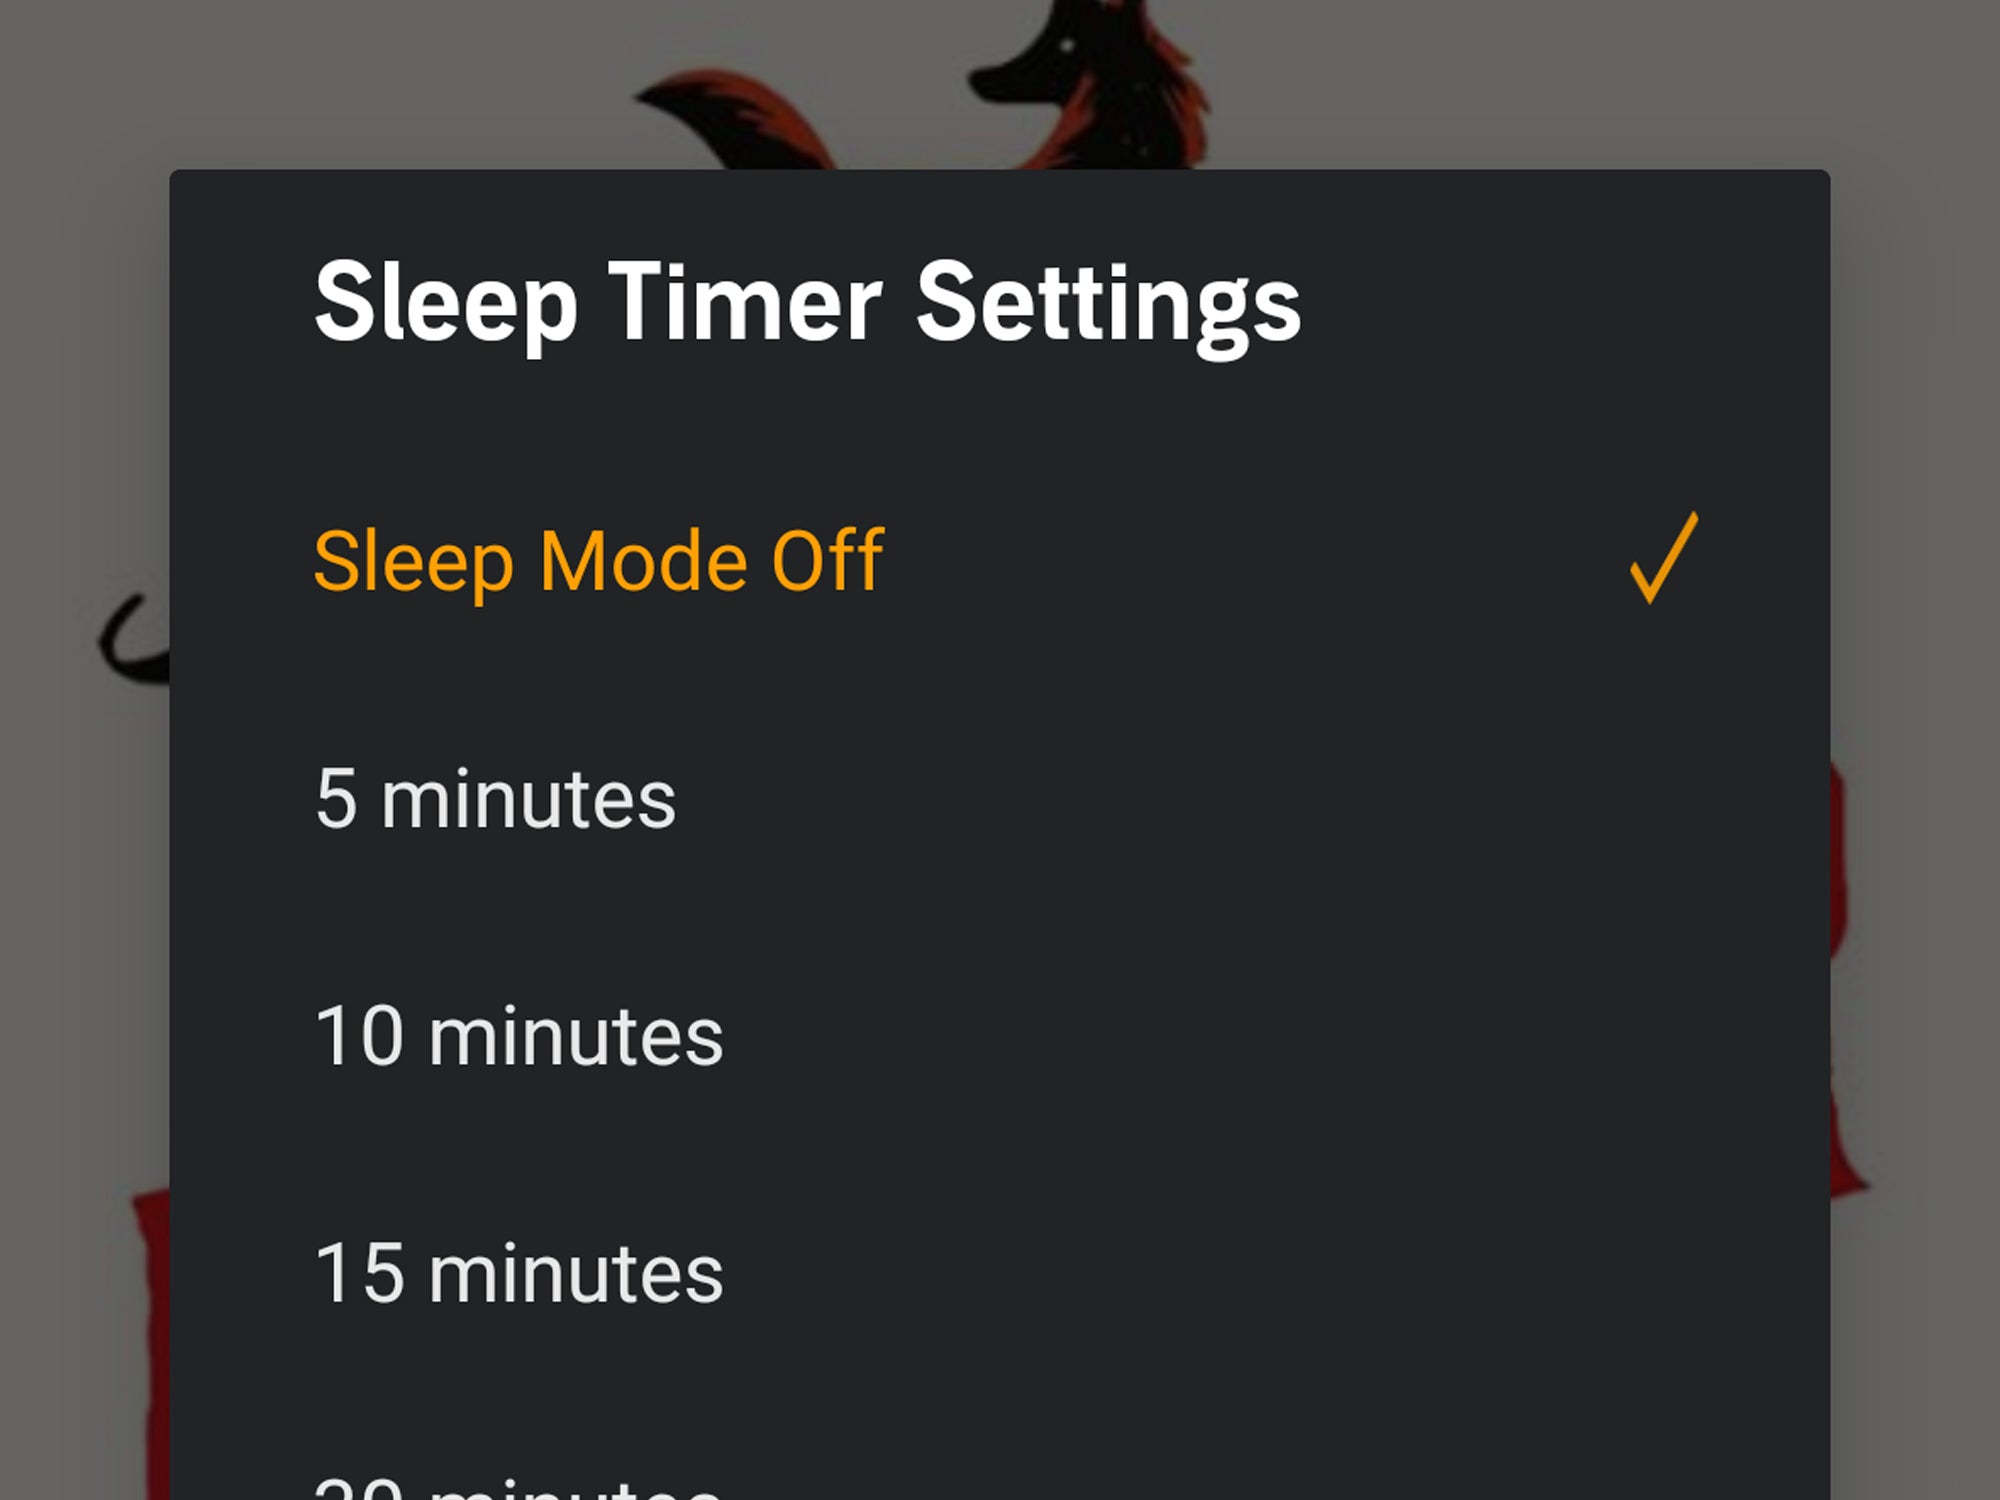 Audible's sleep timer settings, so you can fall asleep to an audiobook.